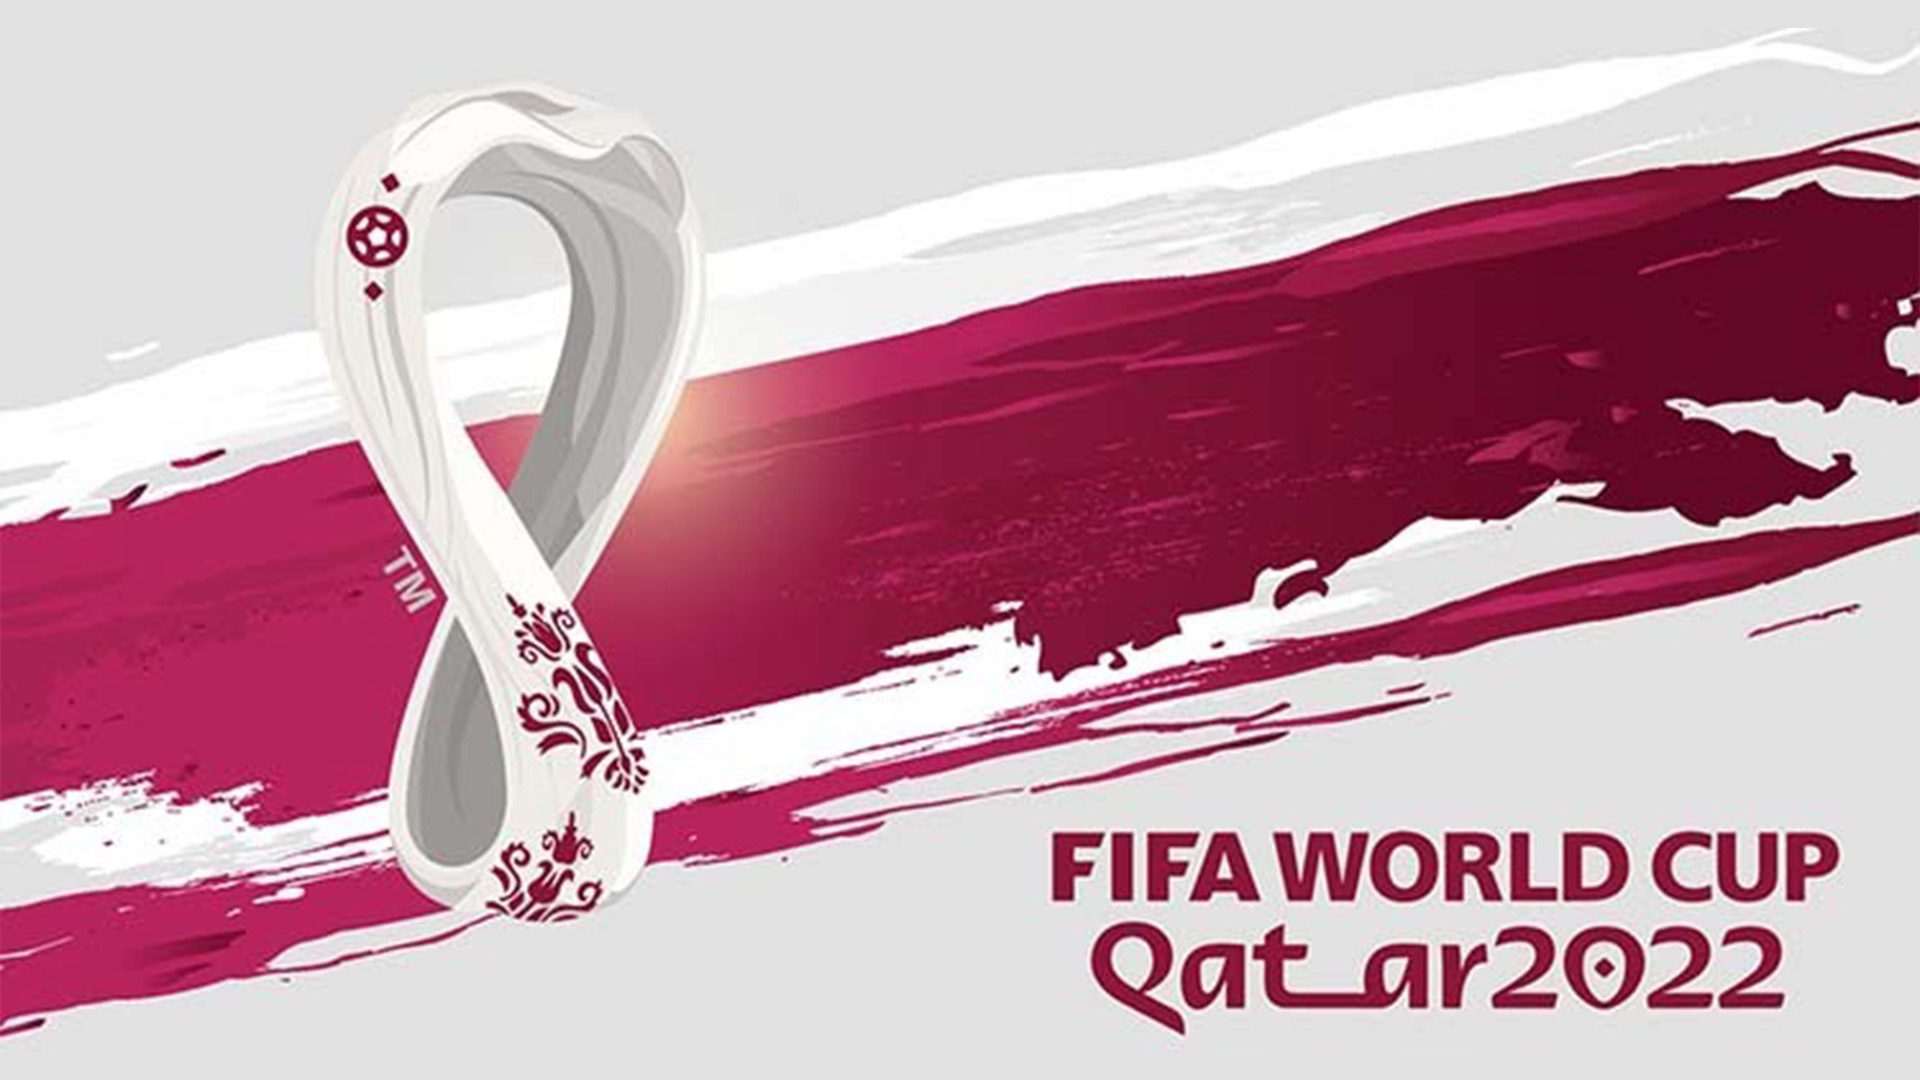 Fifa world cup qatar 2022 official logo black Vector Image